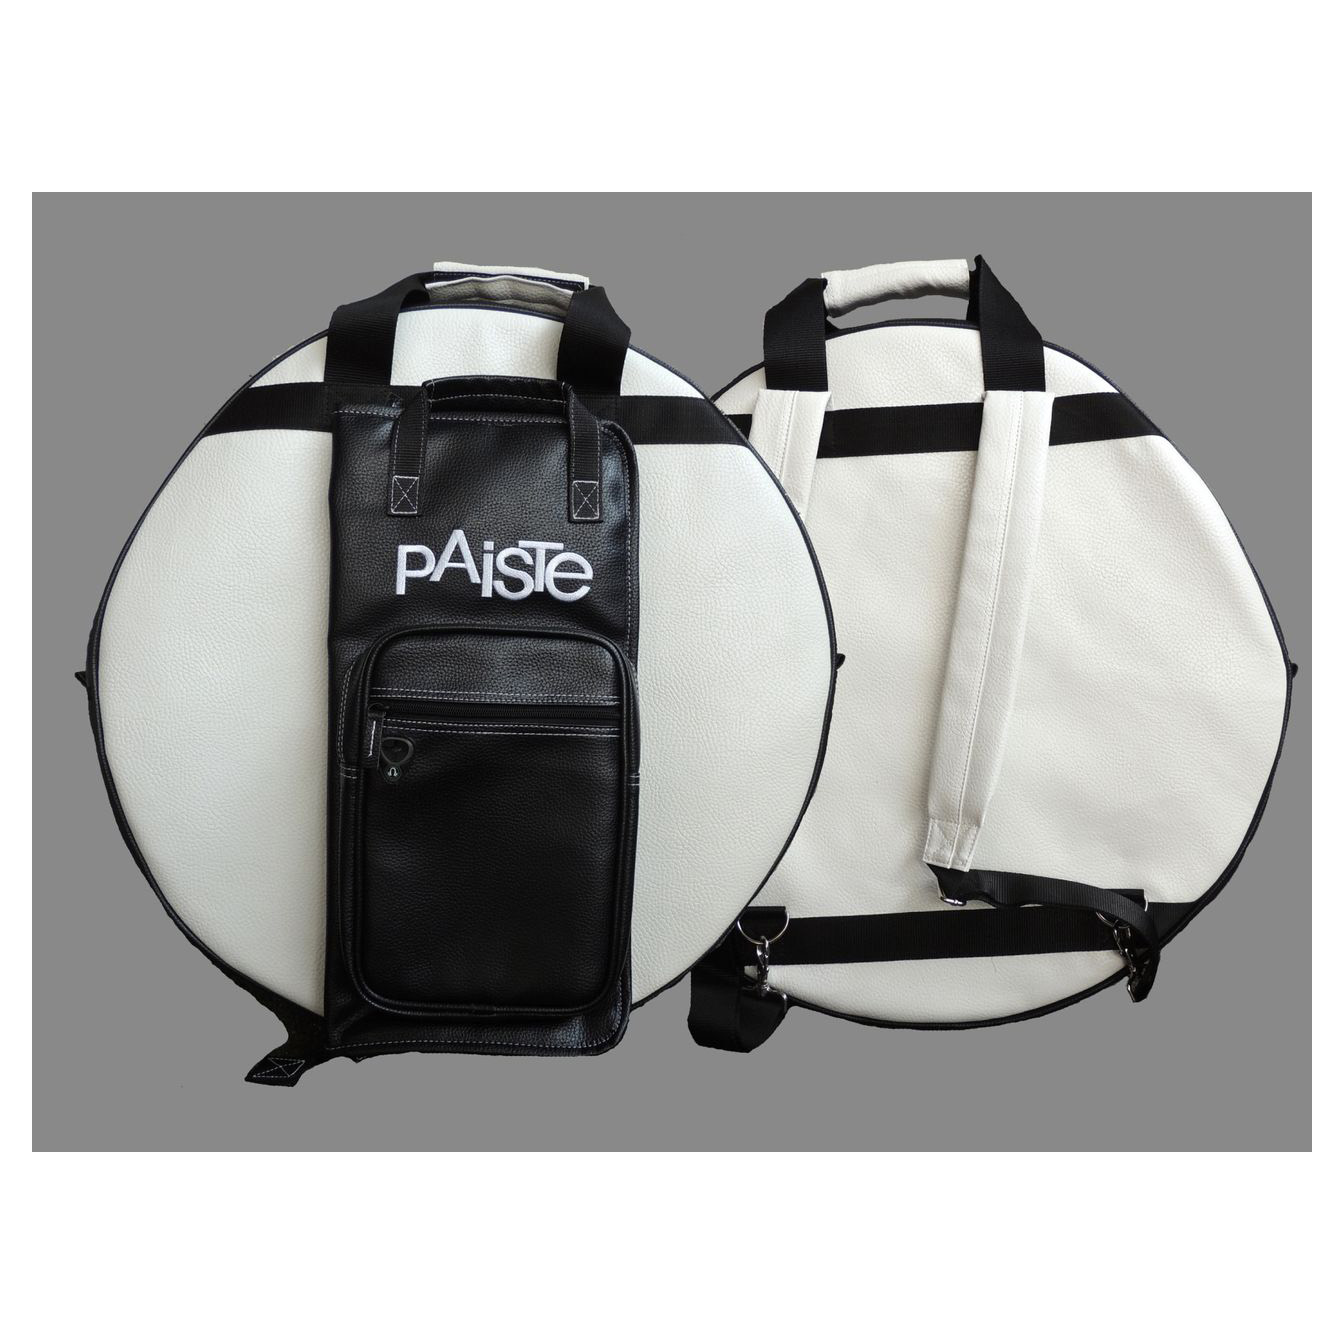 Paiste Professional Cymbal Bag White/ Black Аксессуары для музыкальных инструментов